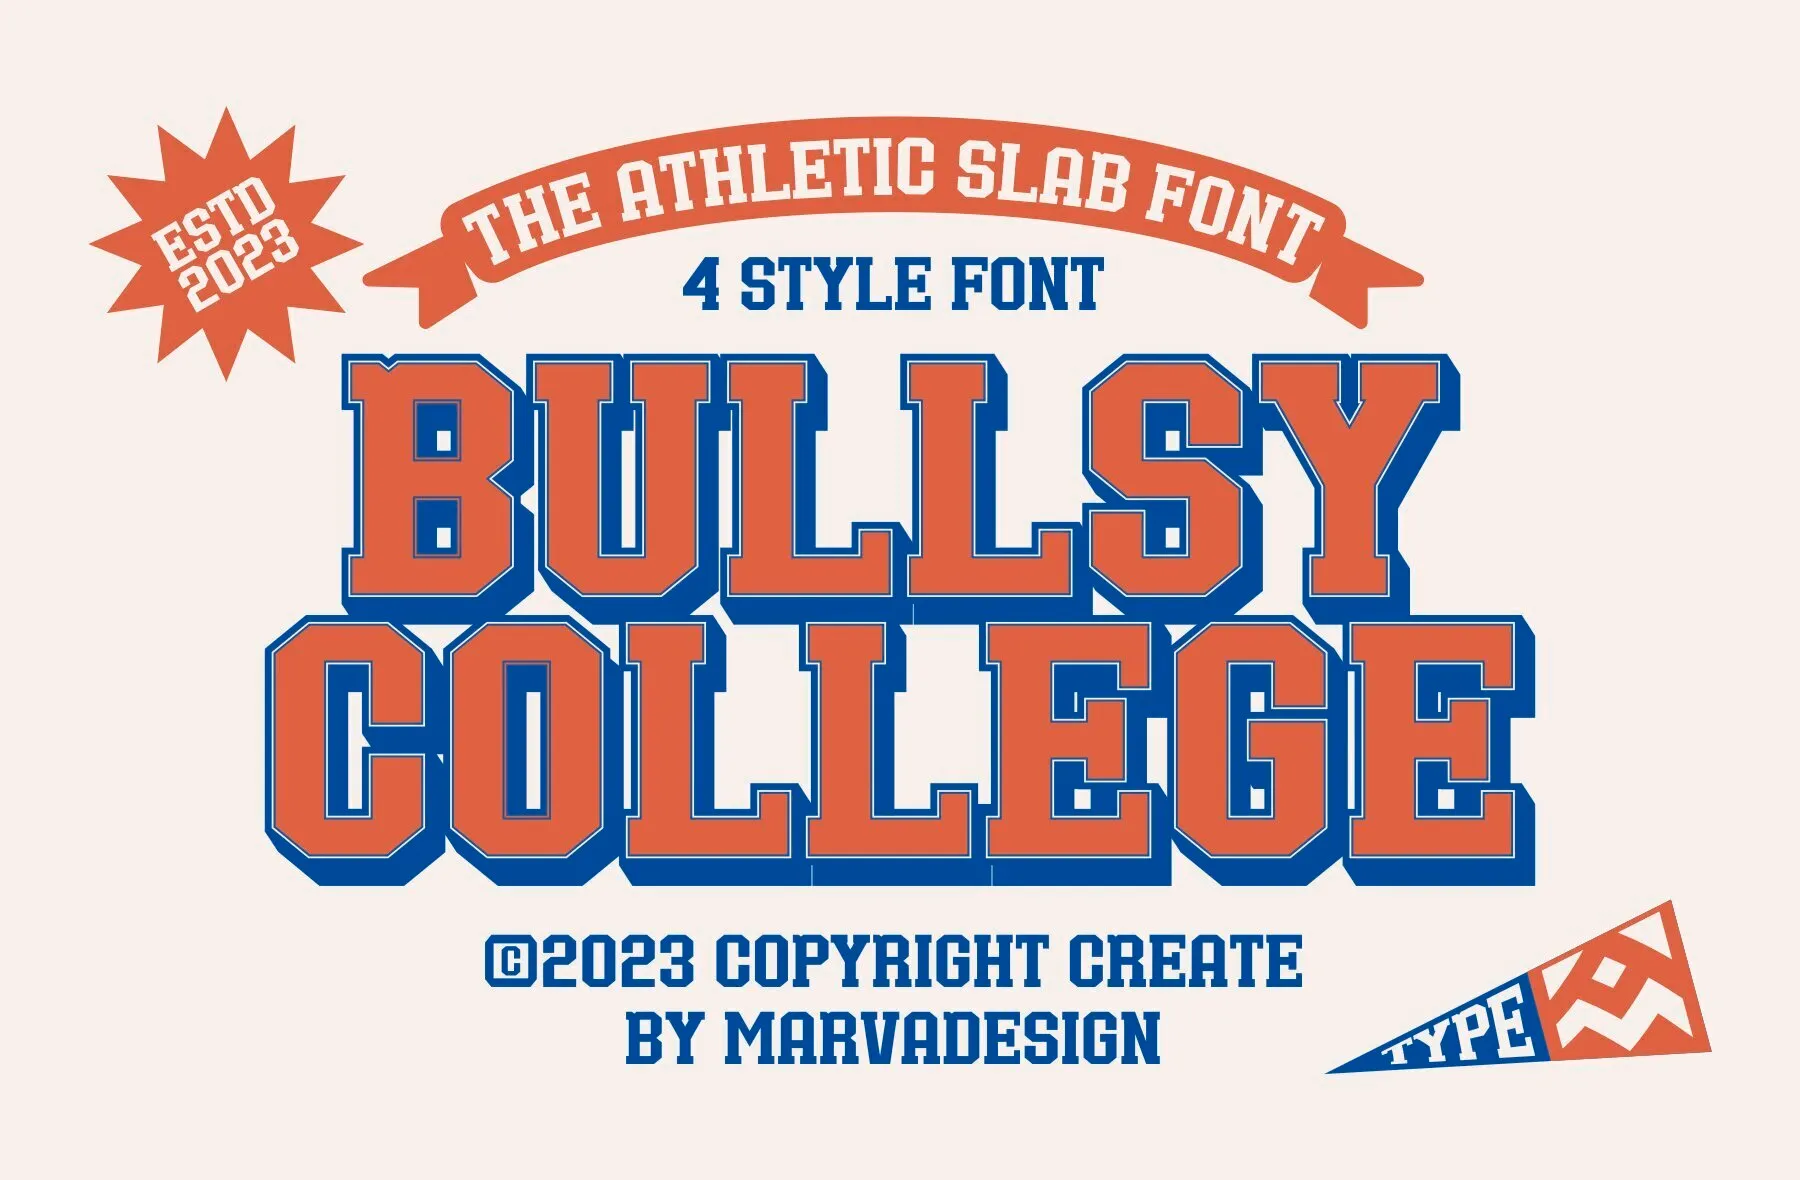 Bullsy College